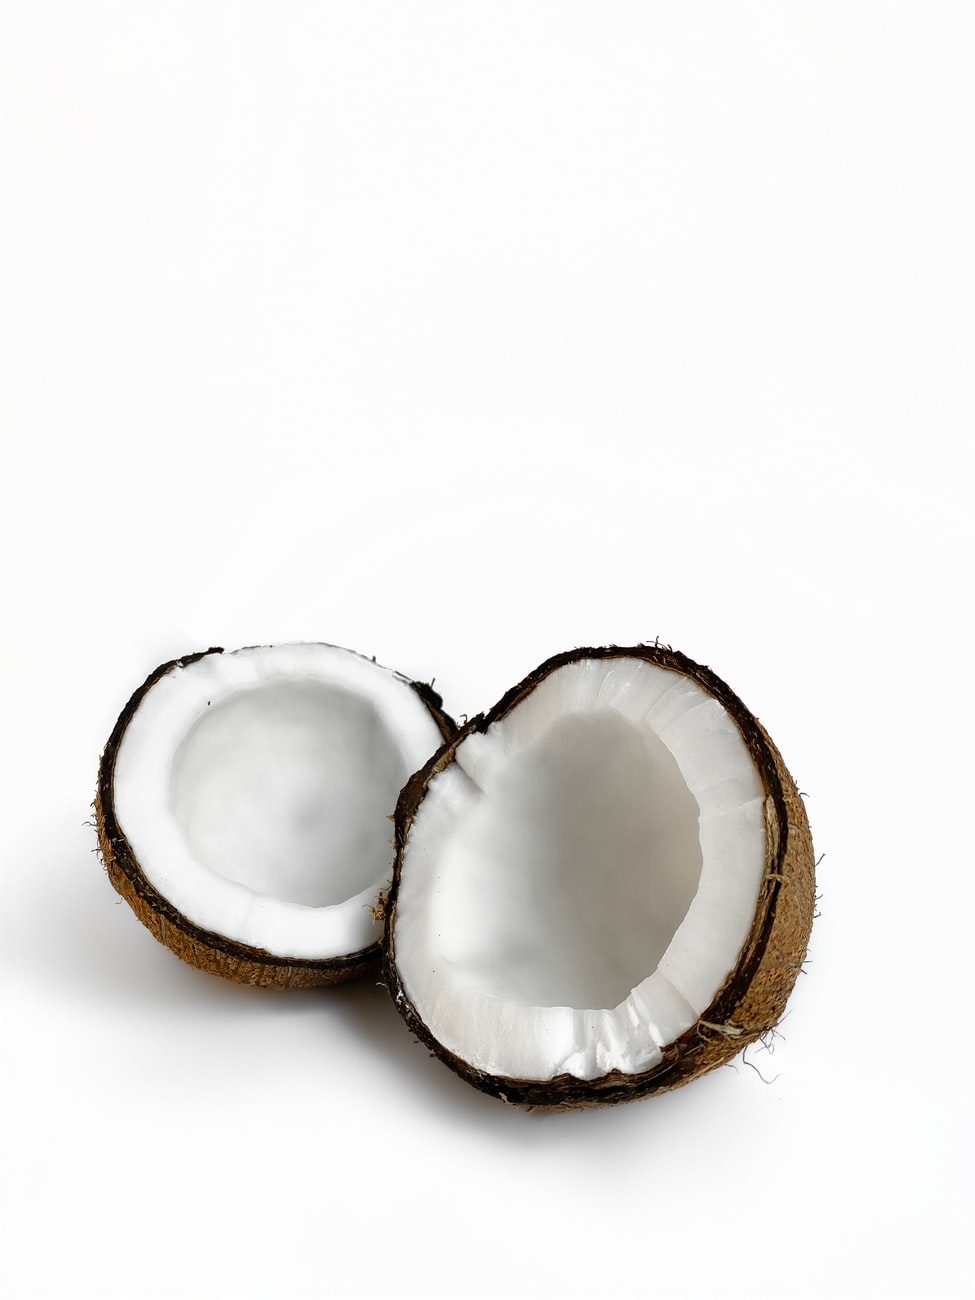 Is coconut milk the same as coconut cream? 